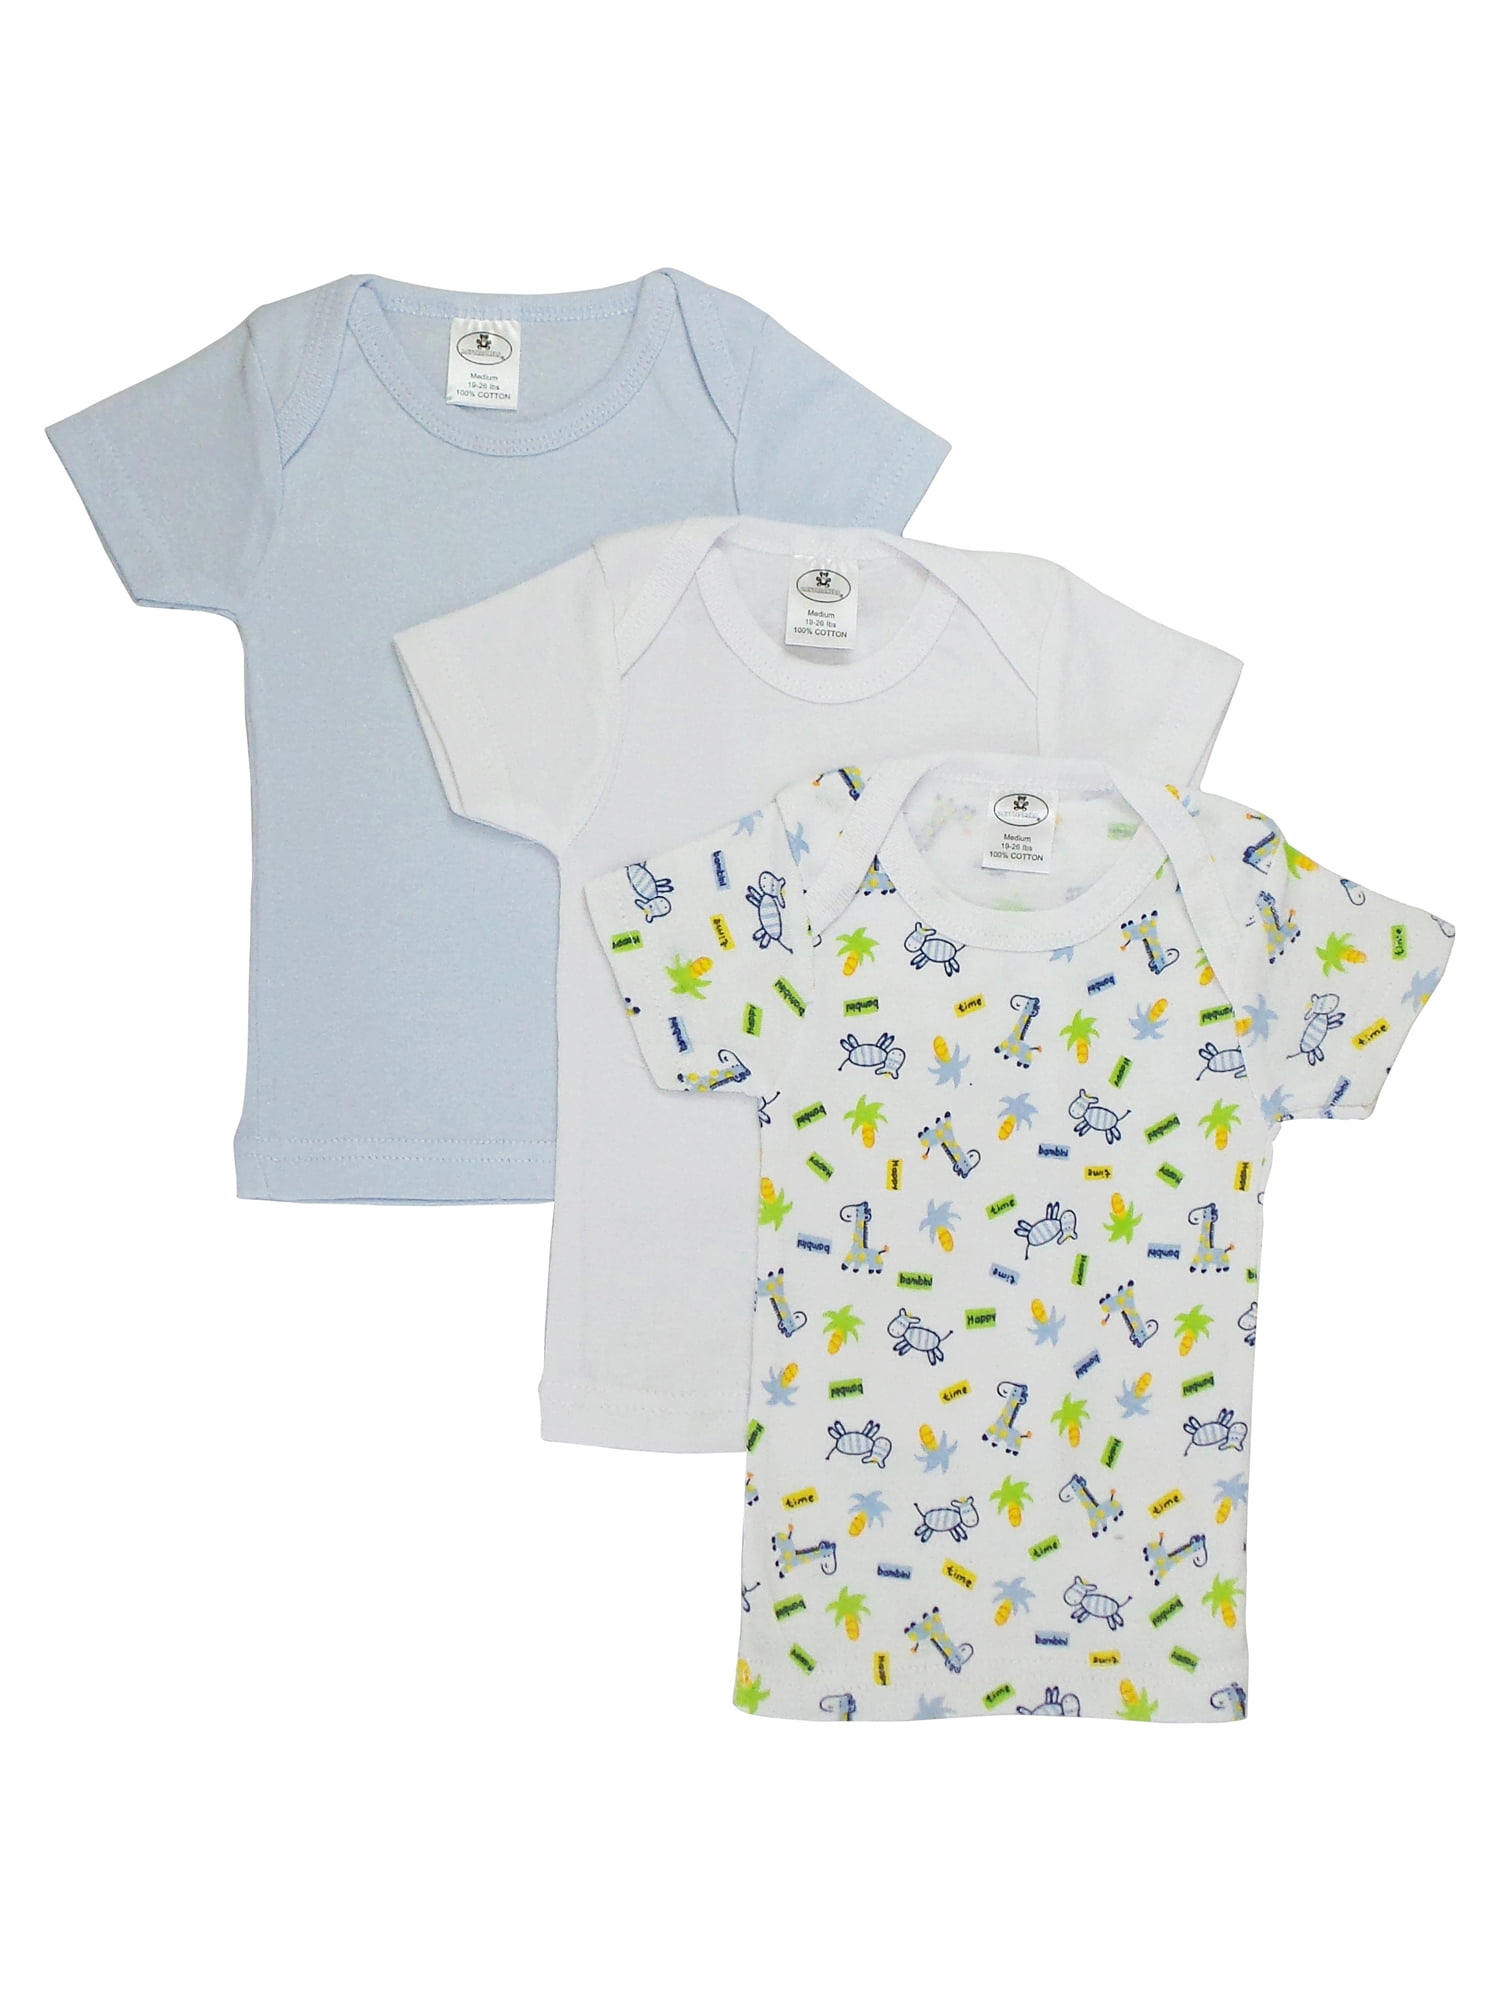 Blue Rib Knit Short Sleeve T-Shirt 3 Yellow Pack Bambini Baby Boy's White